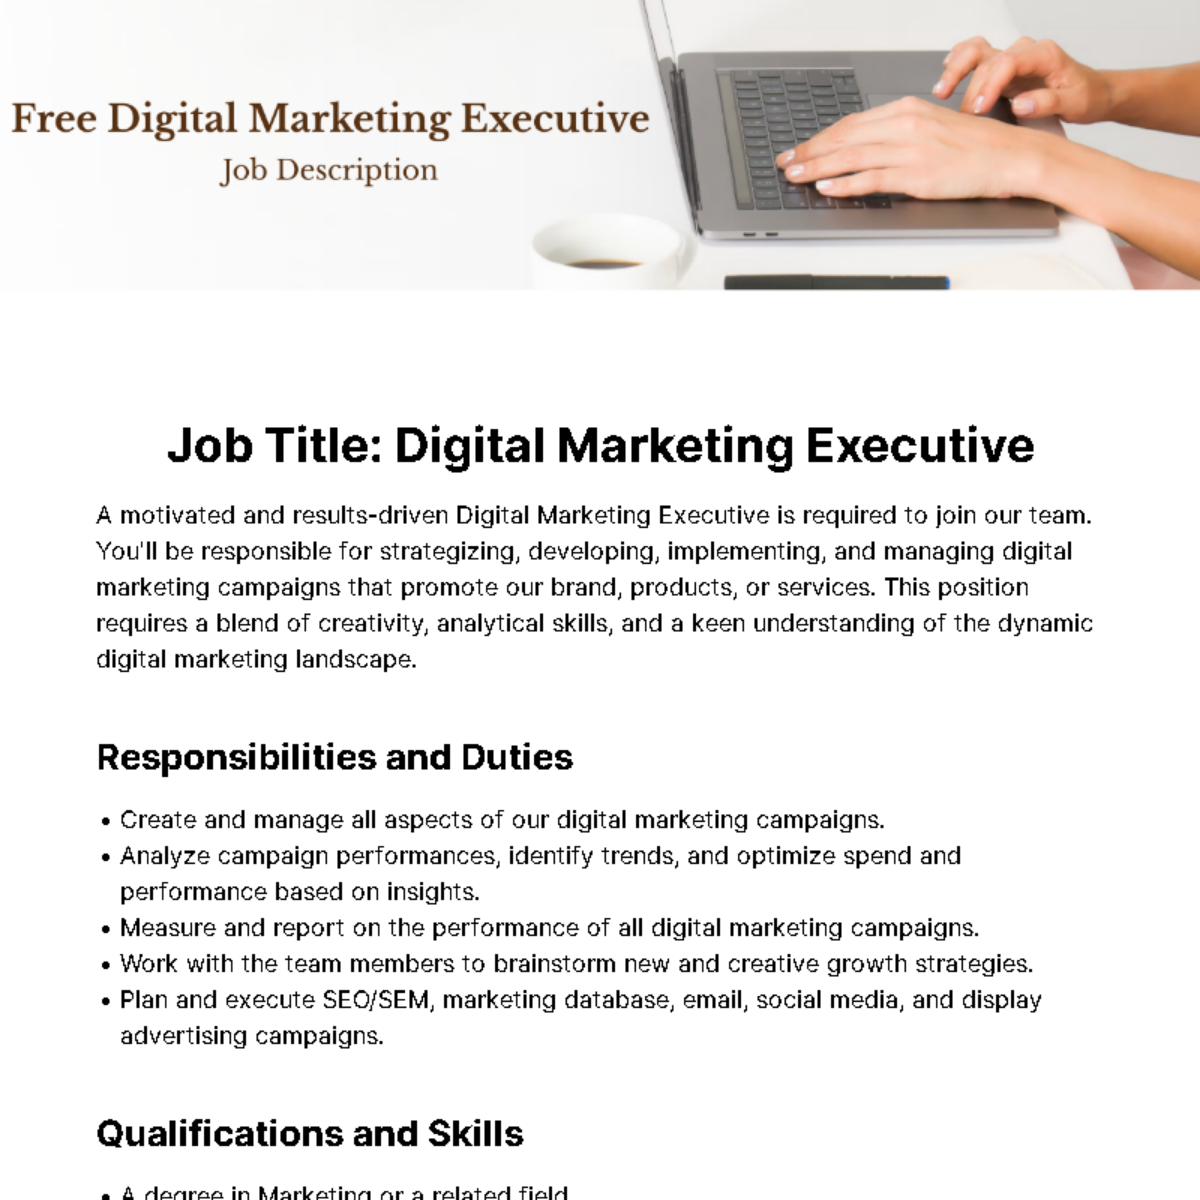 Digital Marketing Executive Job Description Template